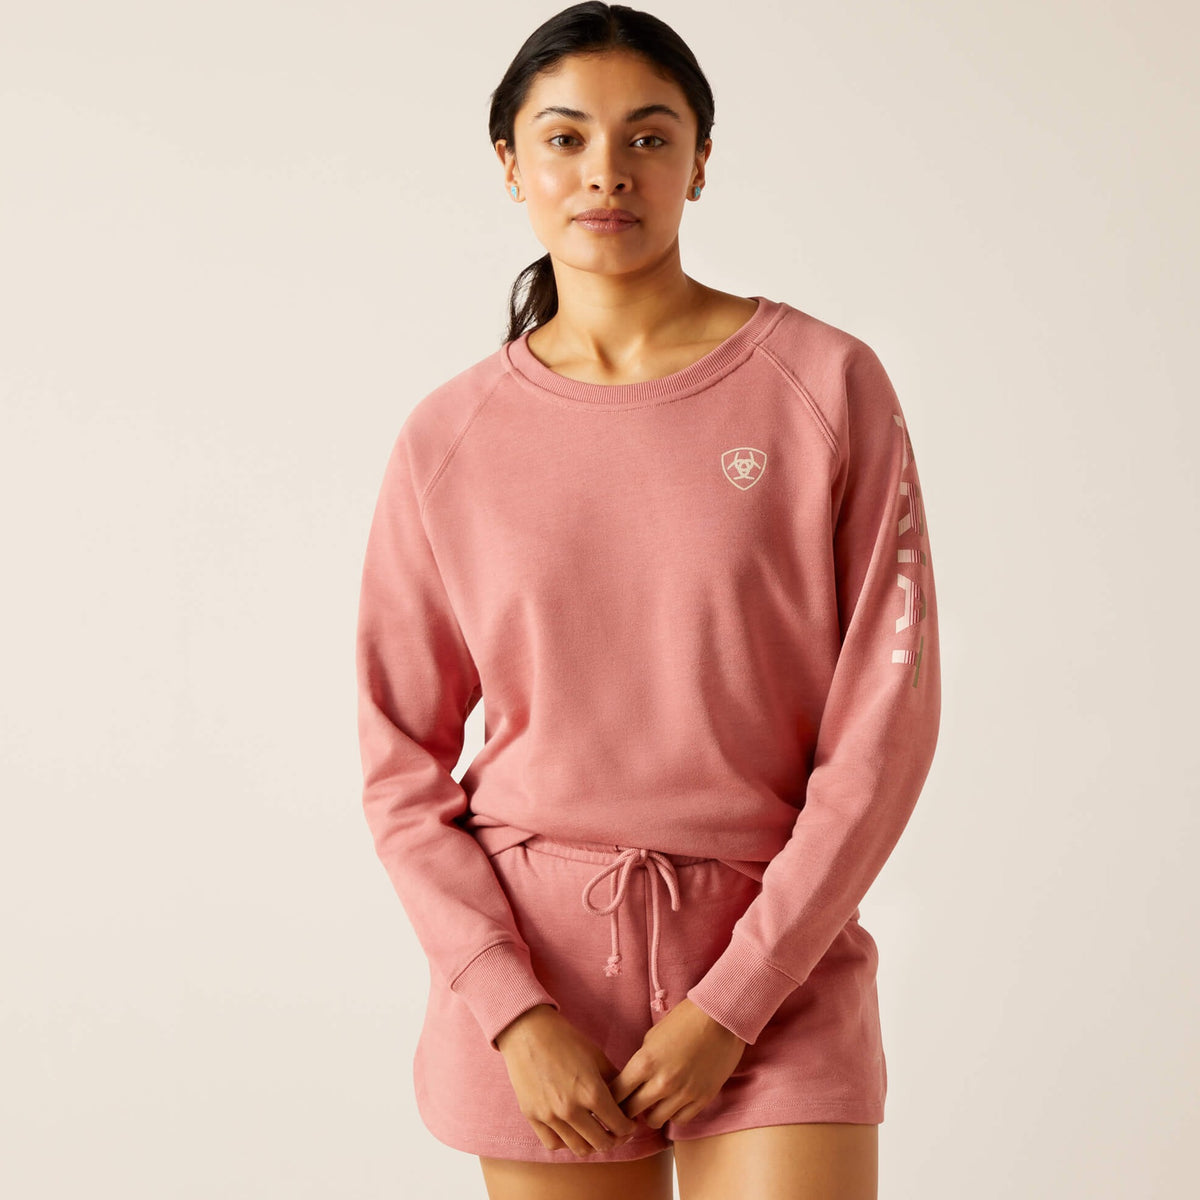 Ariat Women's Logo Sweatshirt in Dusty Rose (Available in Regular & Plus Sizes)